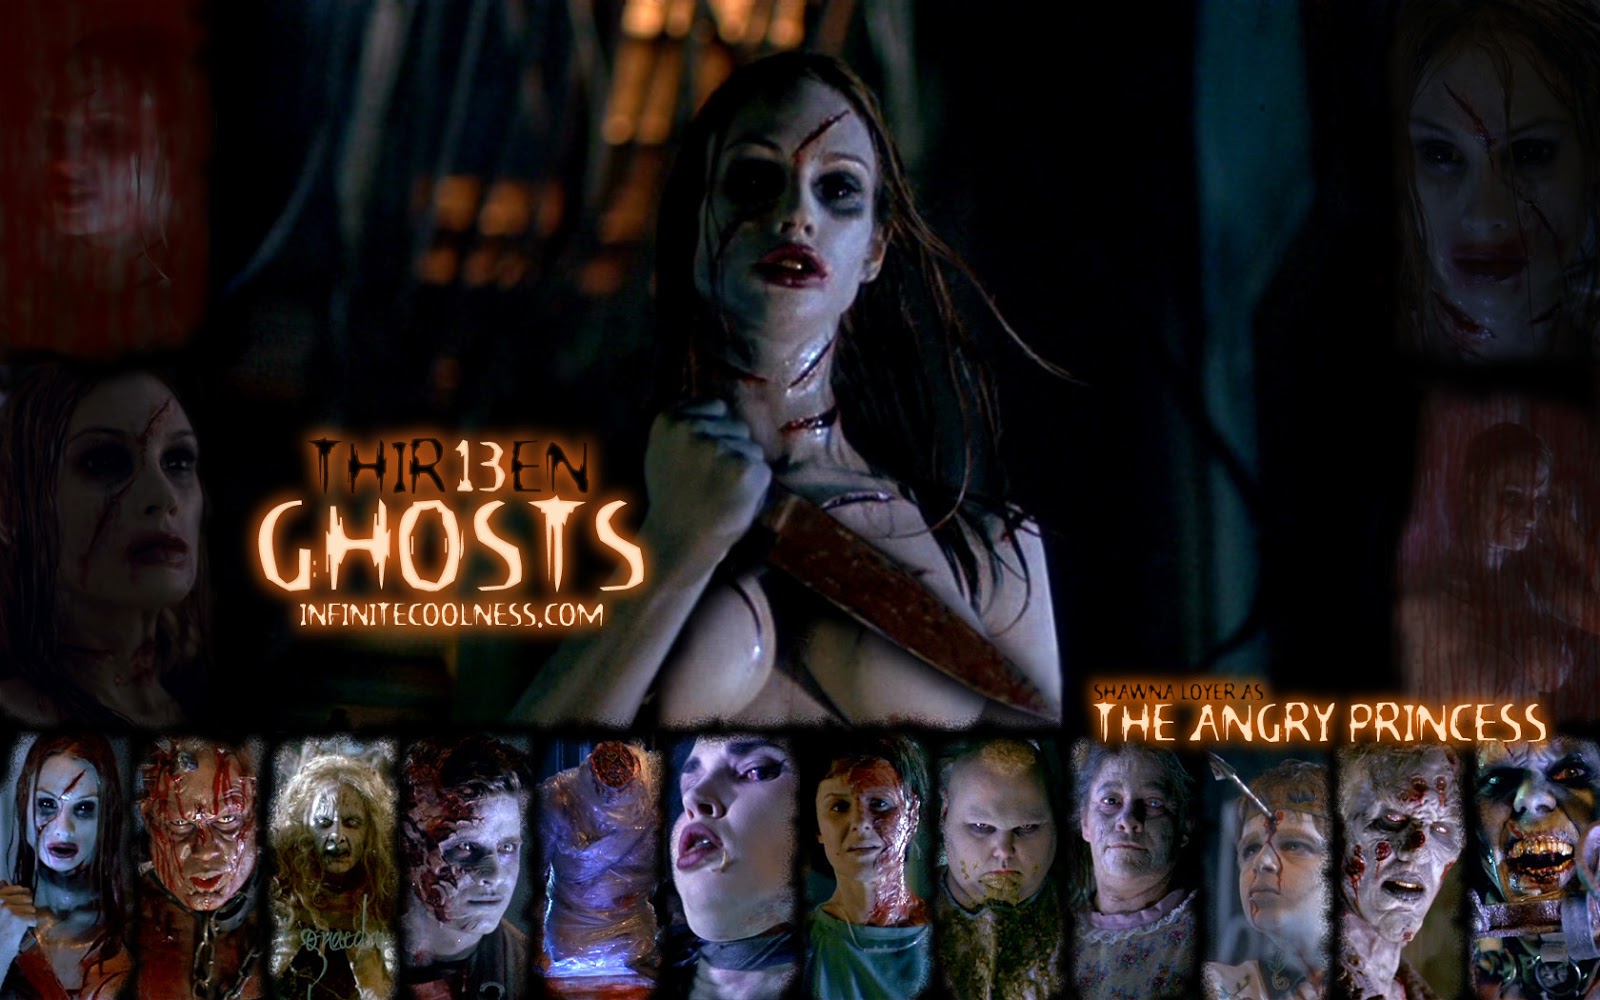 13 ghosts full movie 2009